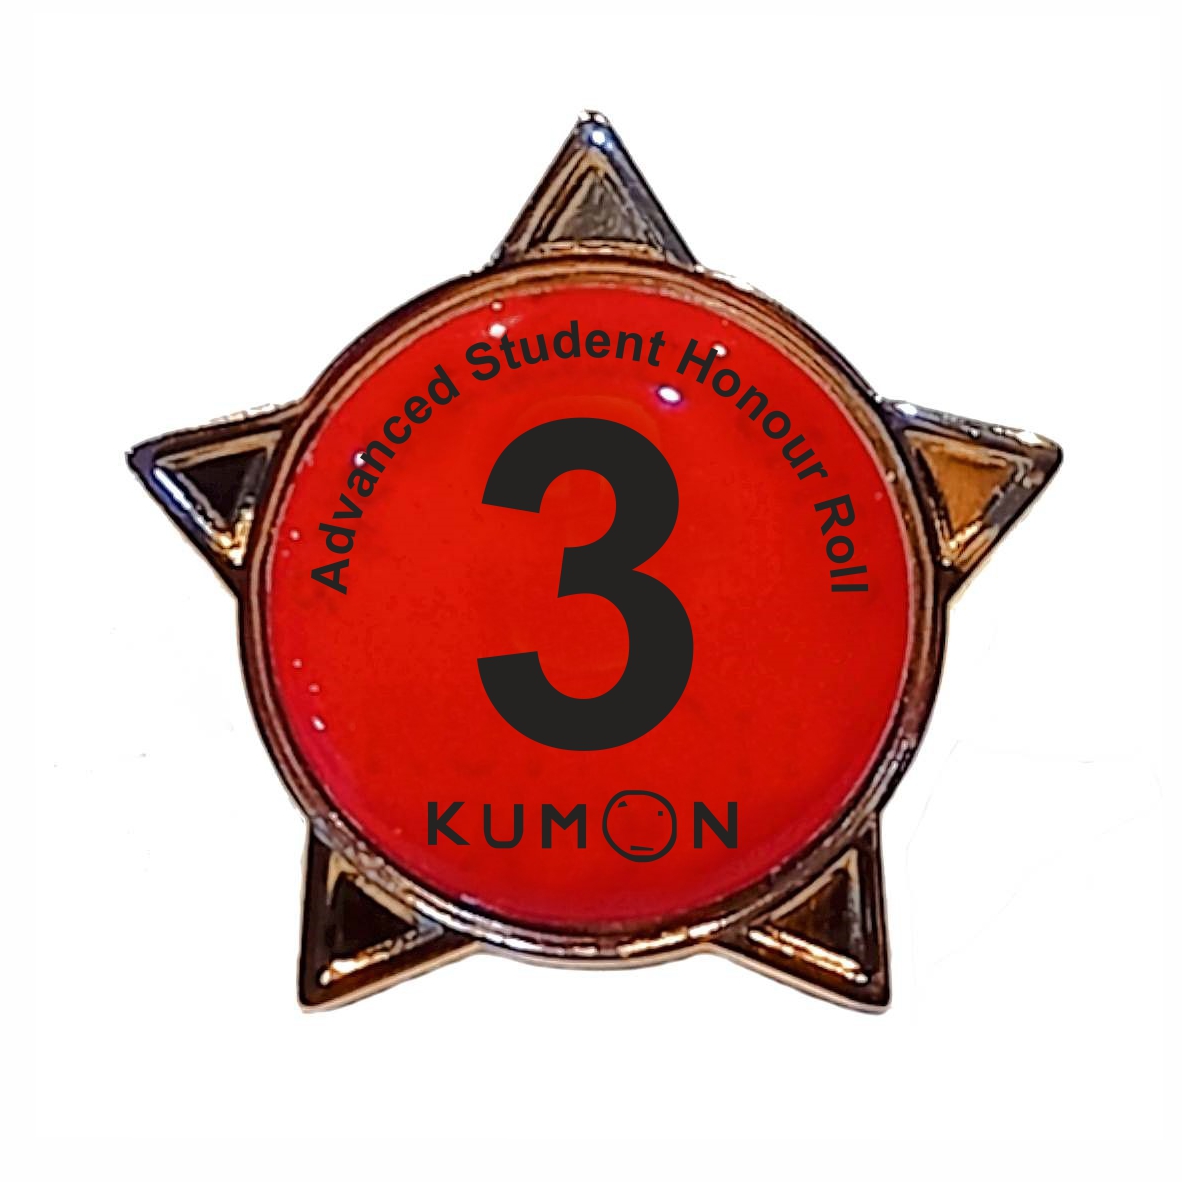 KUMON Advanced Student 3 red